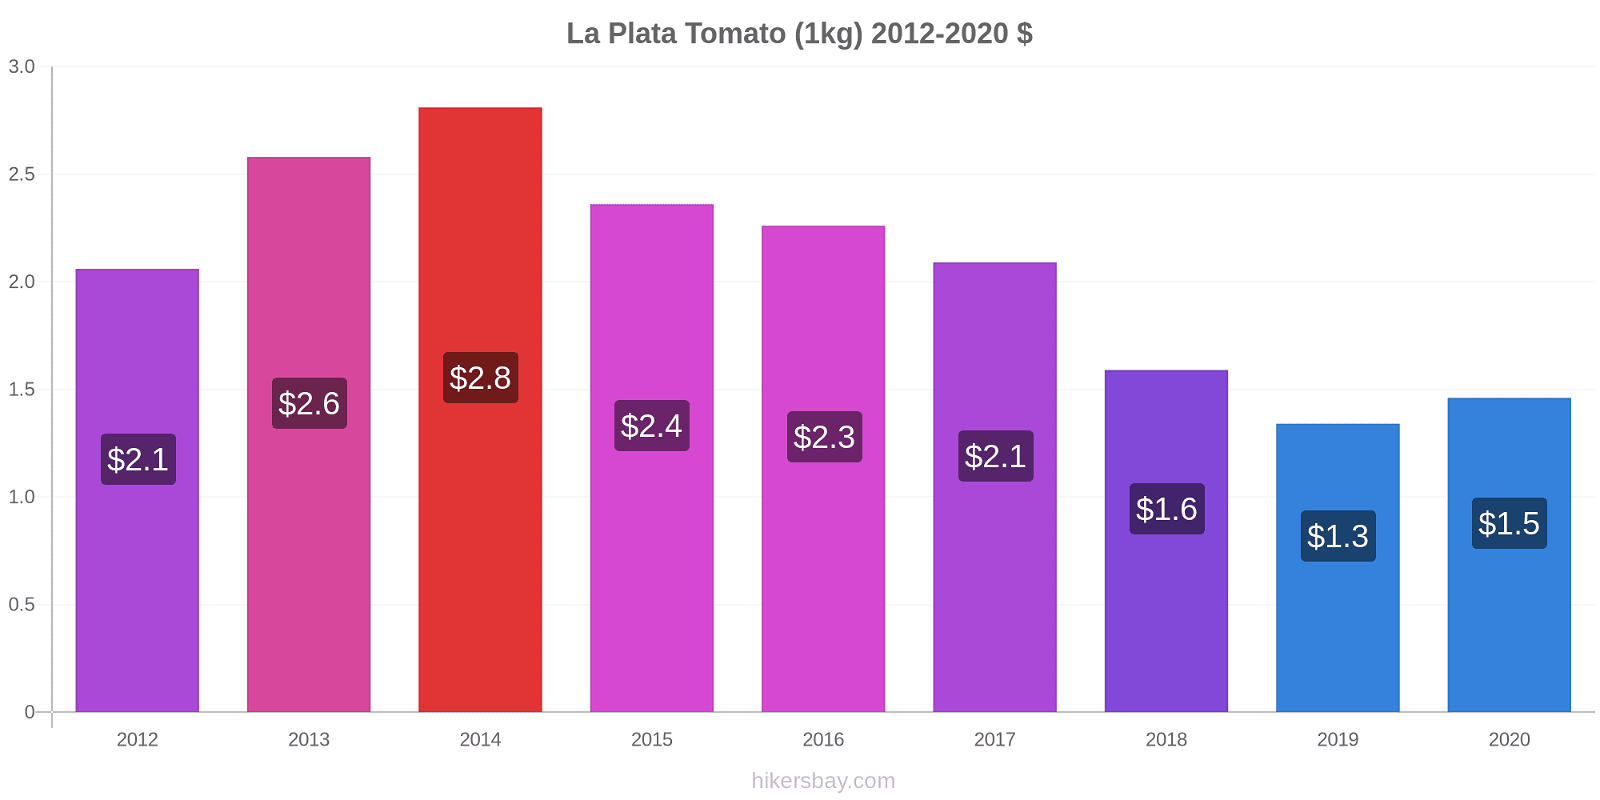 La Plata price changes Tomato (1kg) hikersbay.com